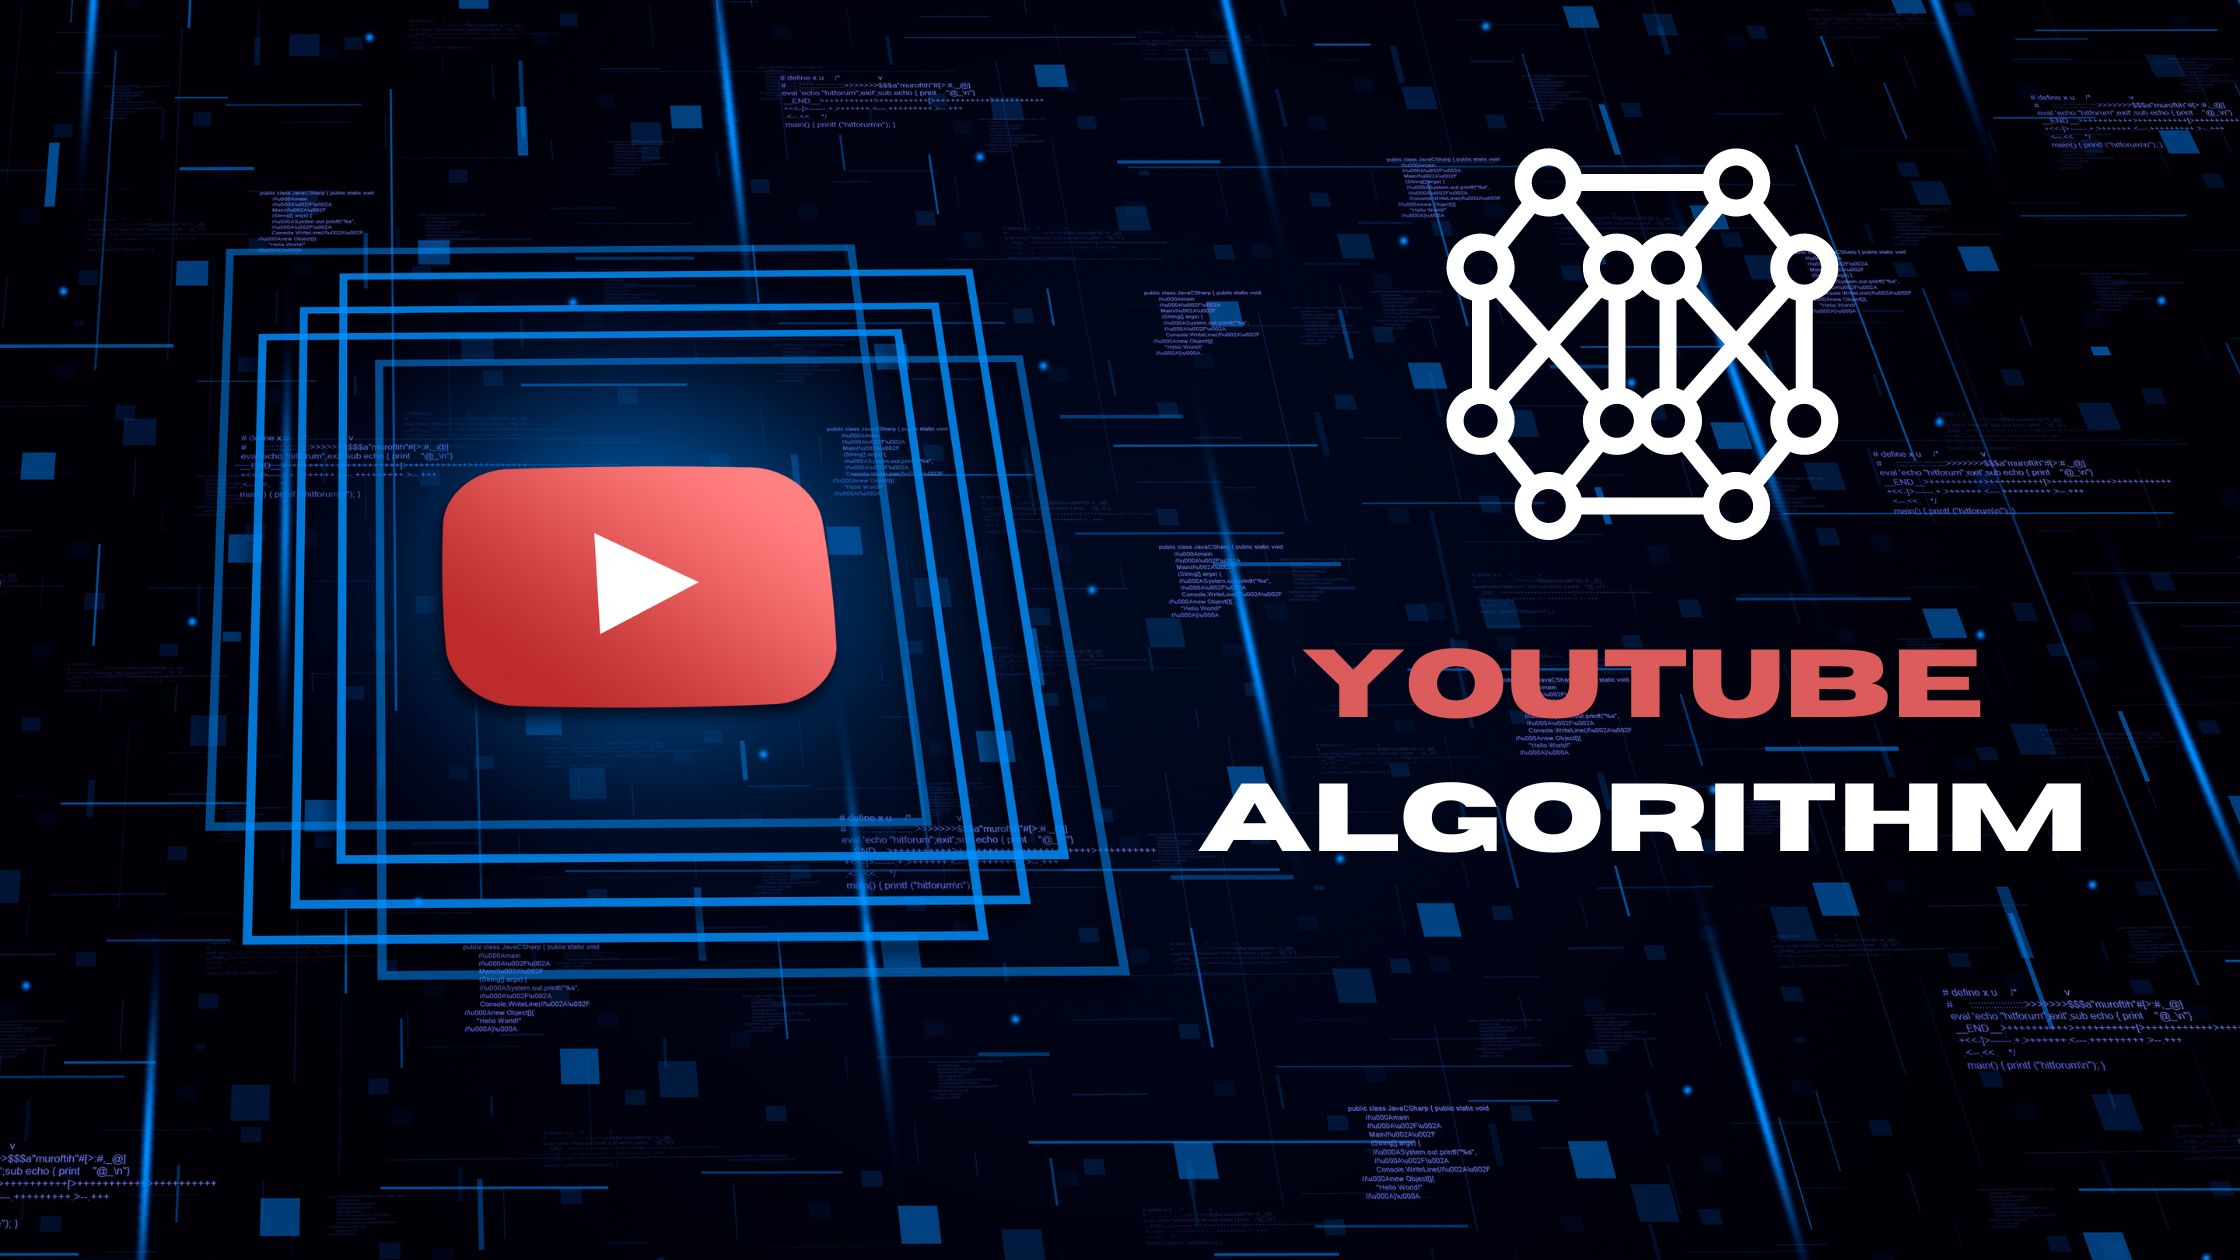 How Does YouTube Algorithm Work